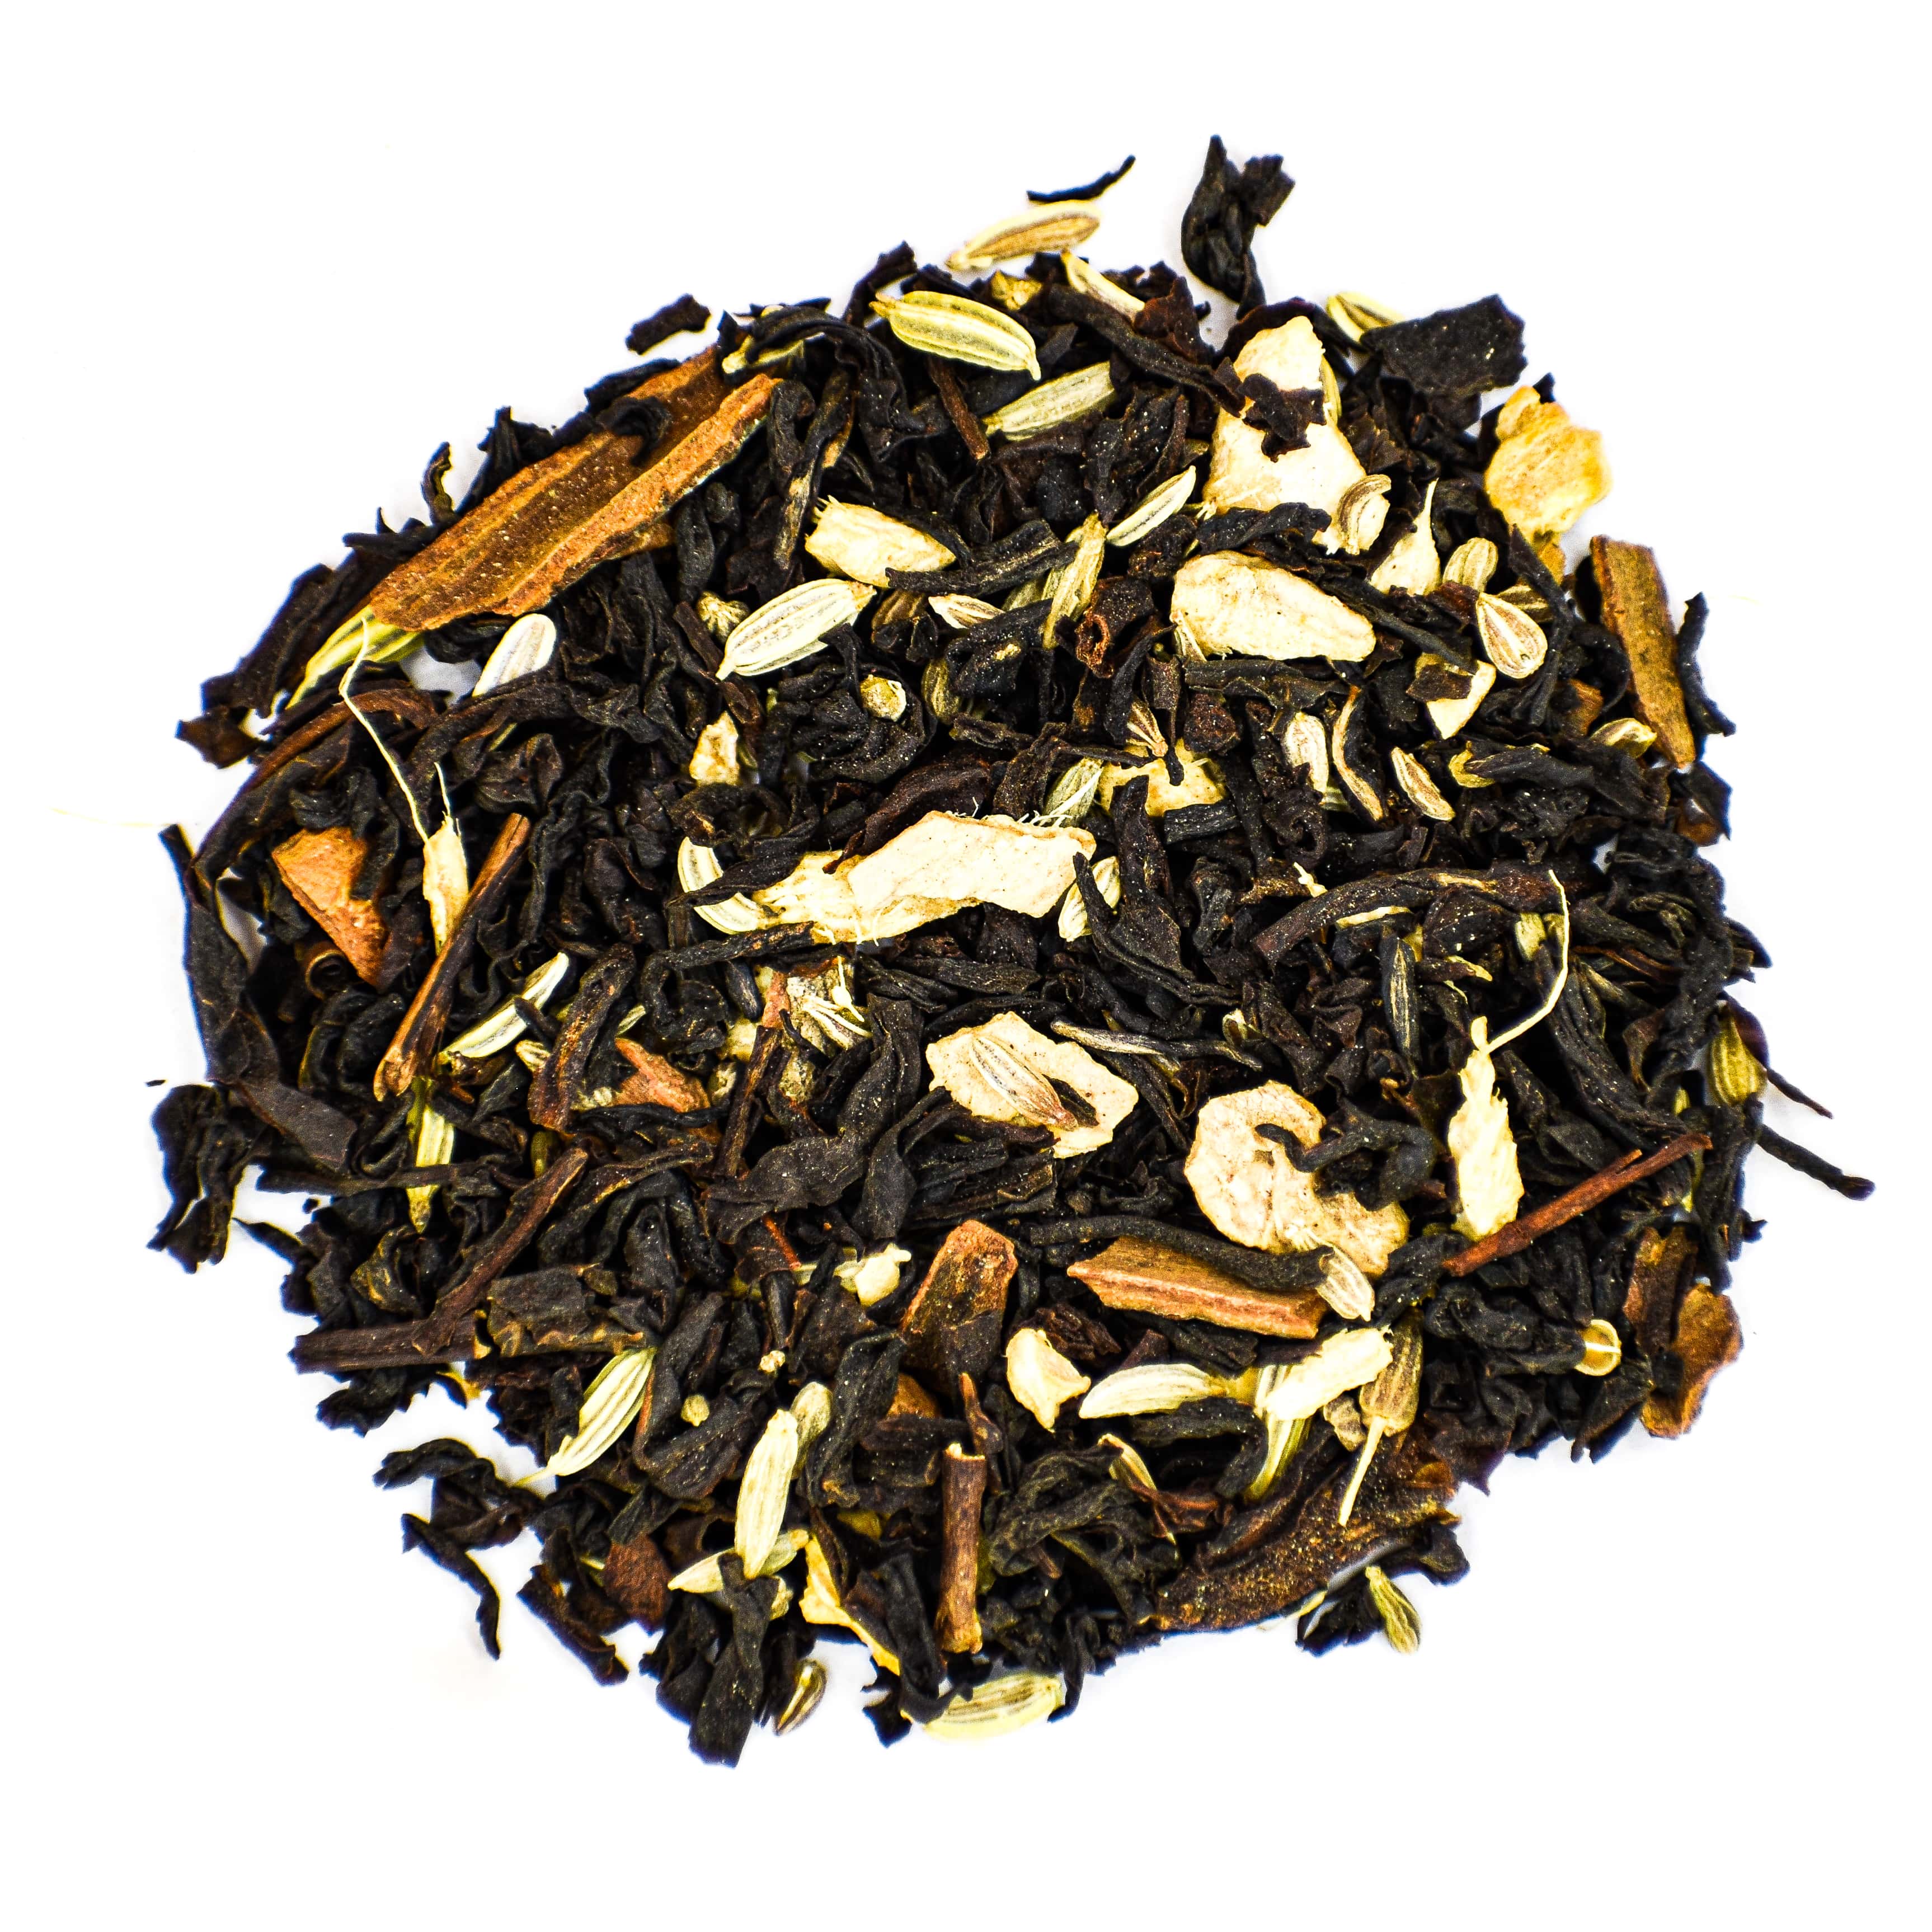 Lekkere losse zwarte chai thee met Zwarte thee Assam Kaneelstokjes Venkel Gember Anijs Kruidnagel Kardemom poeder